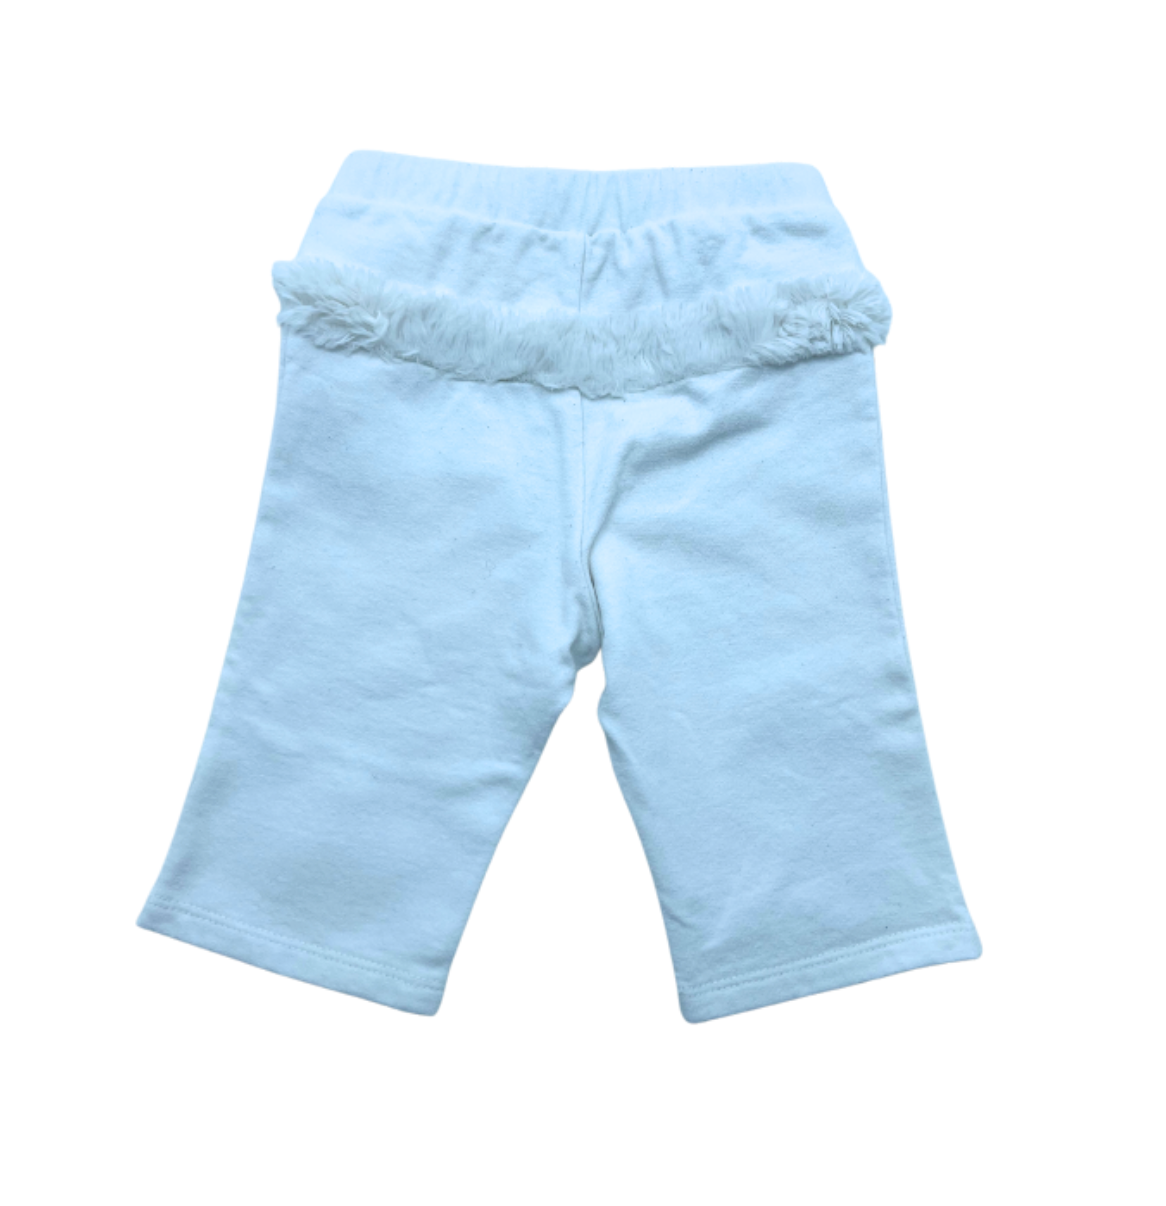 BABY DIOR - Pantalon blanc - 6 mois